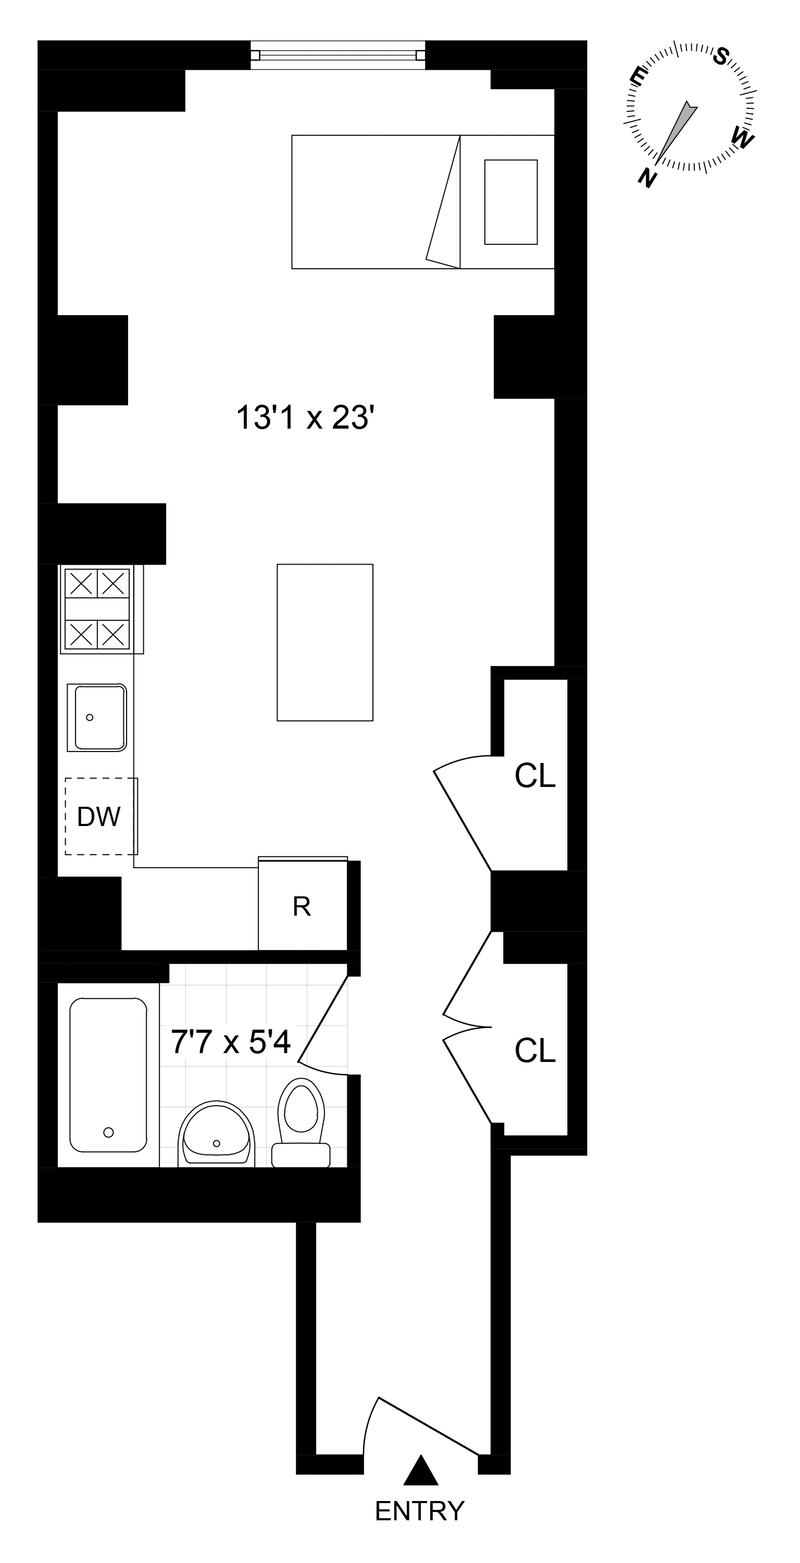 Floorplan for 20 West Street, 29C